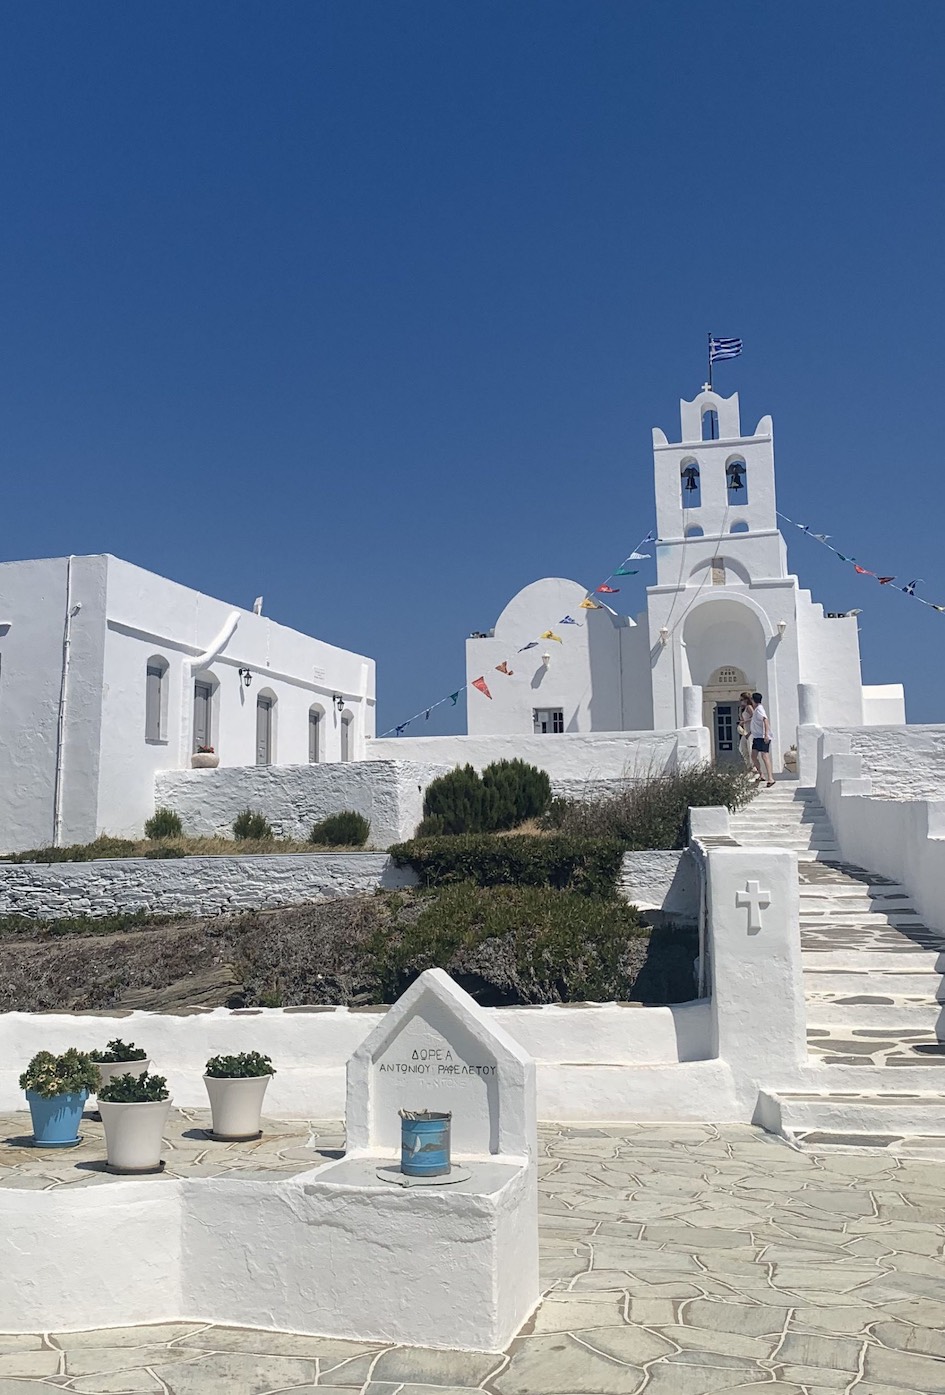 Destination wedding venue Greece - Carpe Diem Weddings planner